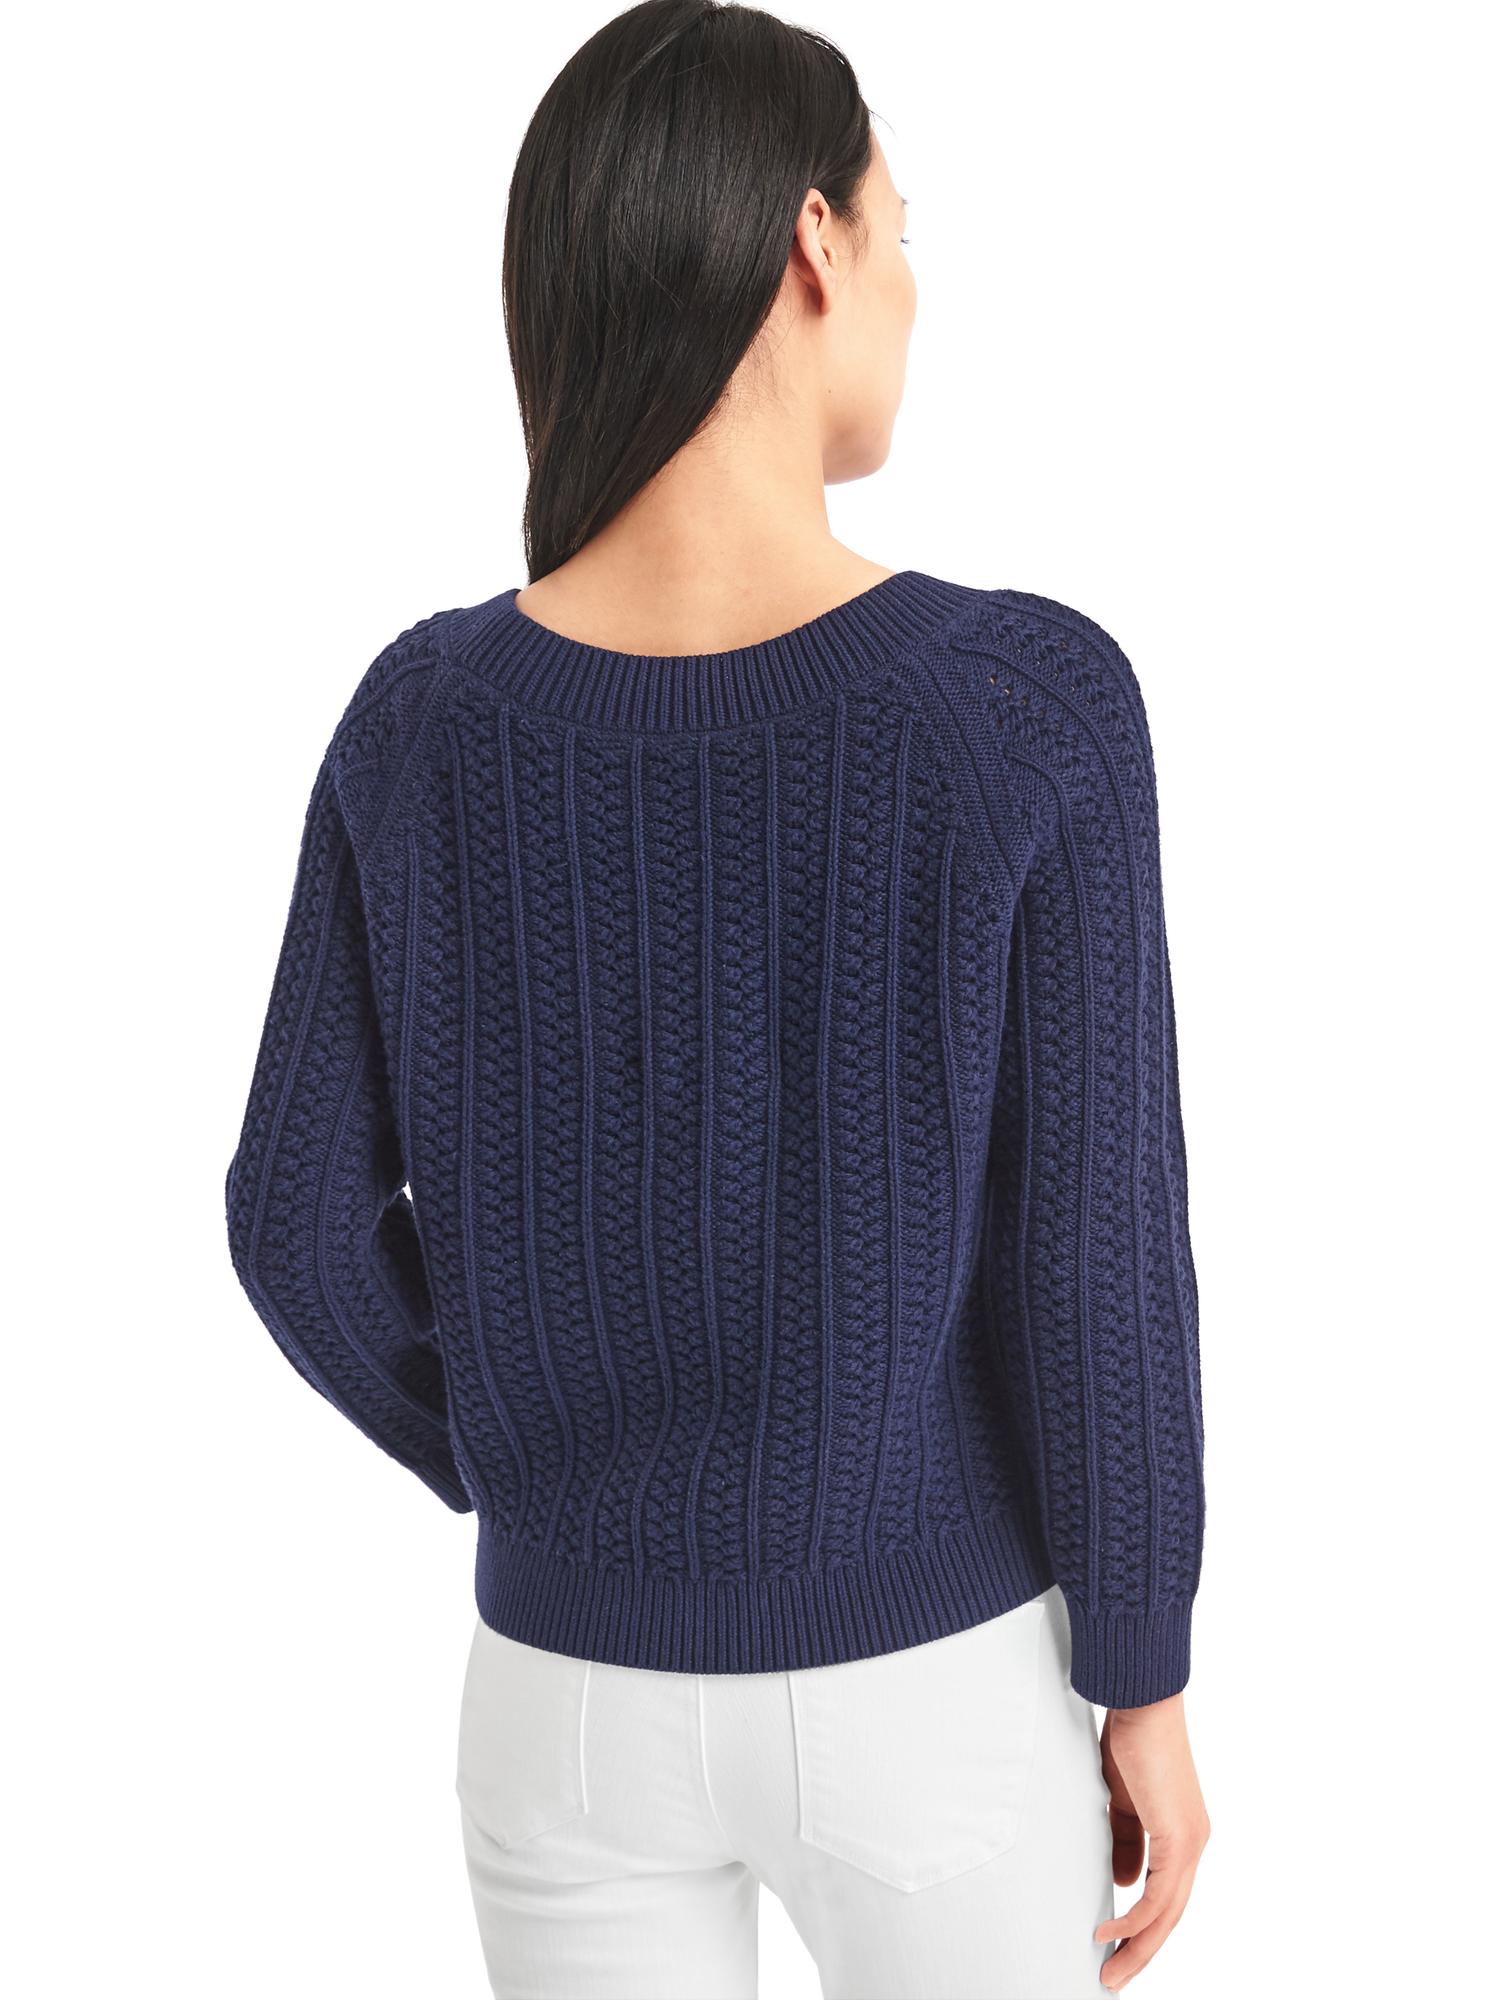 Soft textured sweater | Gap